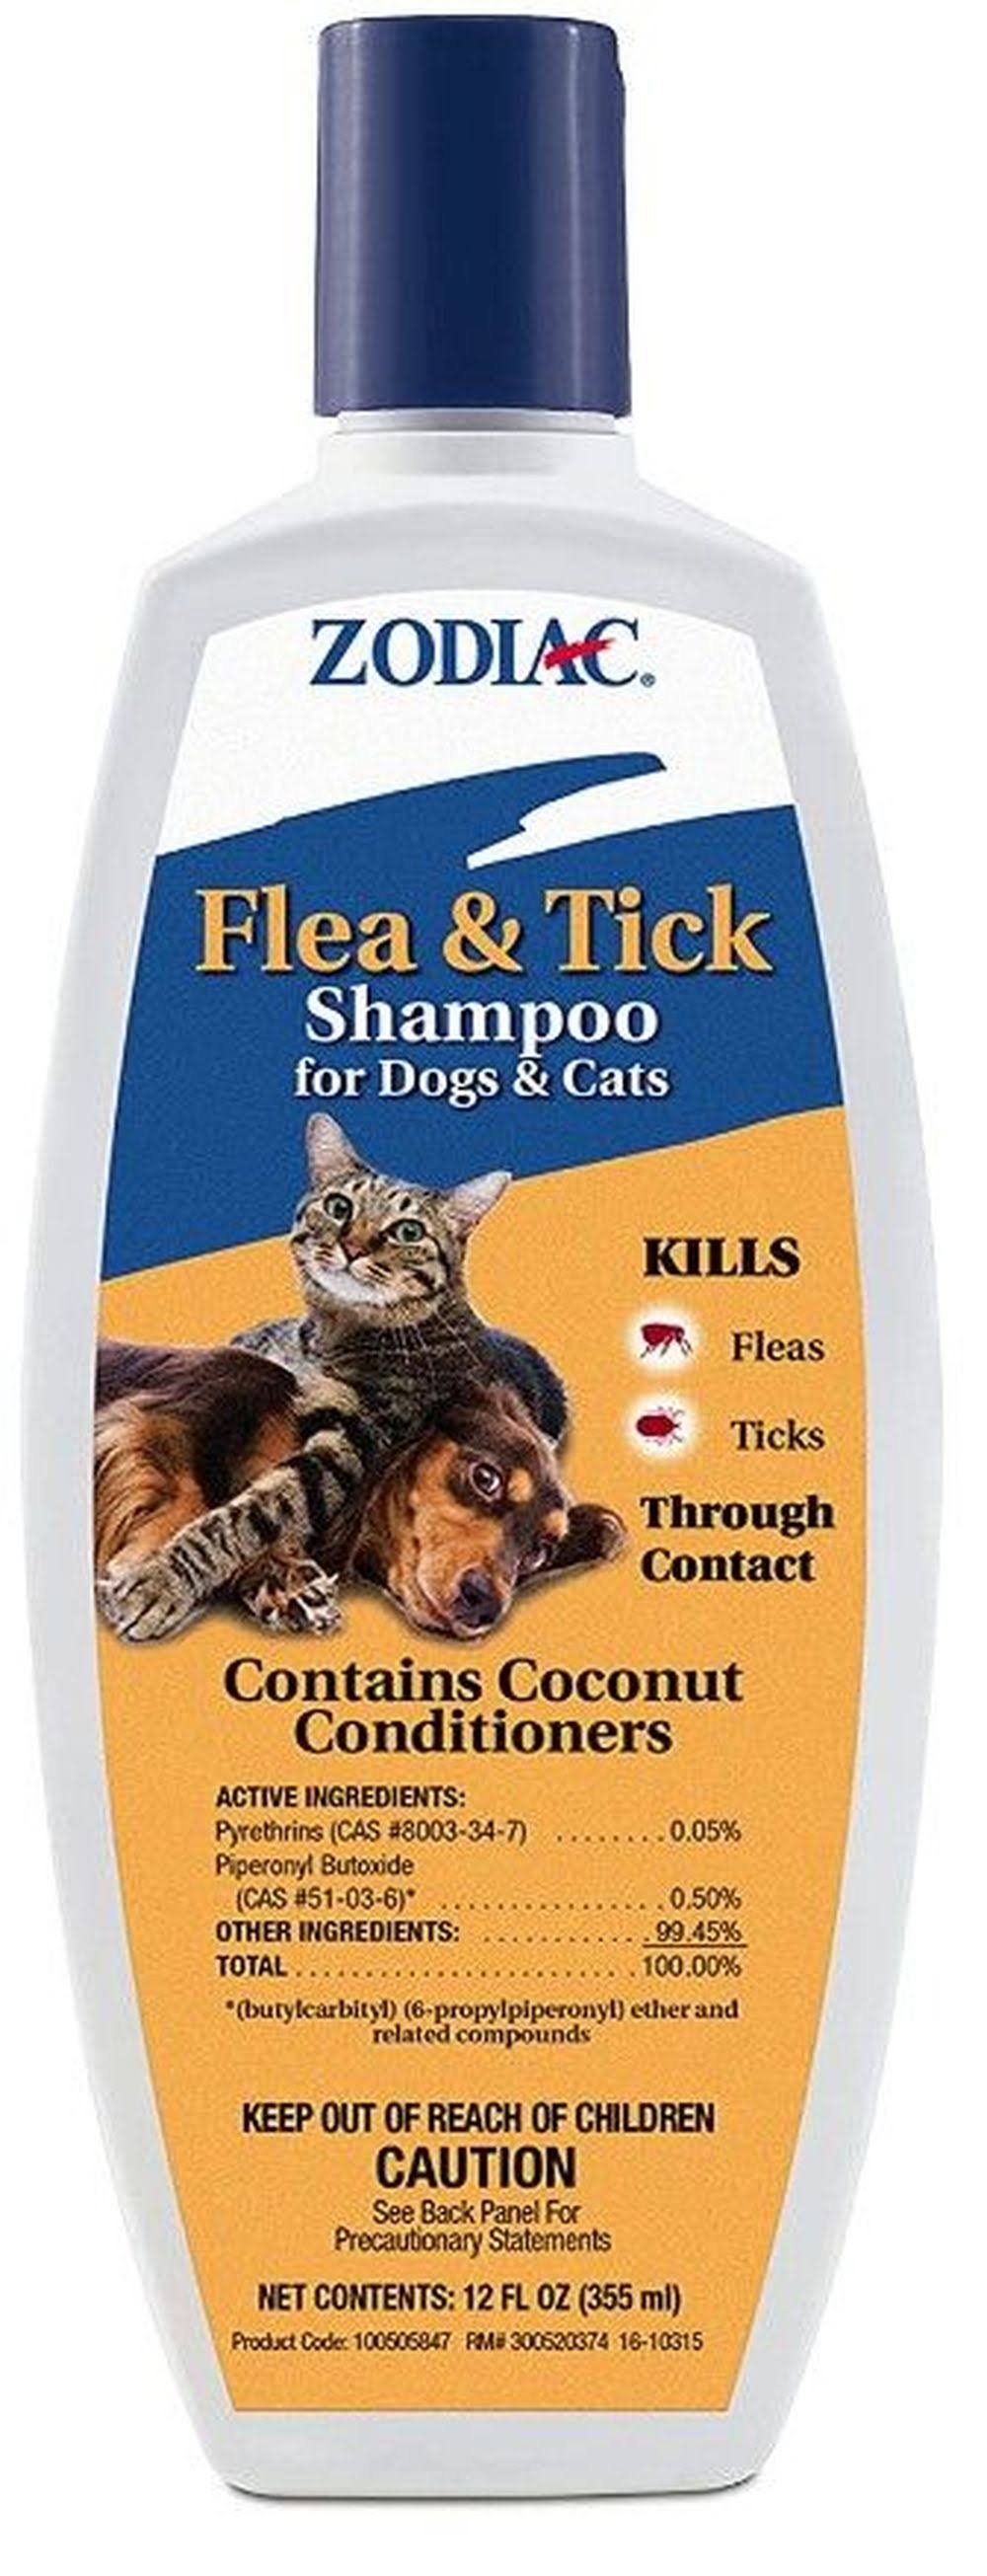 Zodiac Flea and Tick Shampoo for Dogs and Cats - 12oz